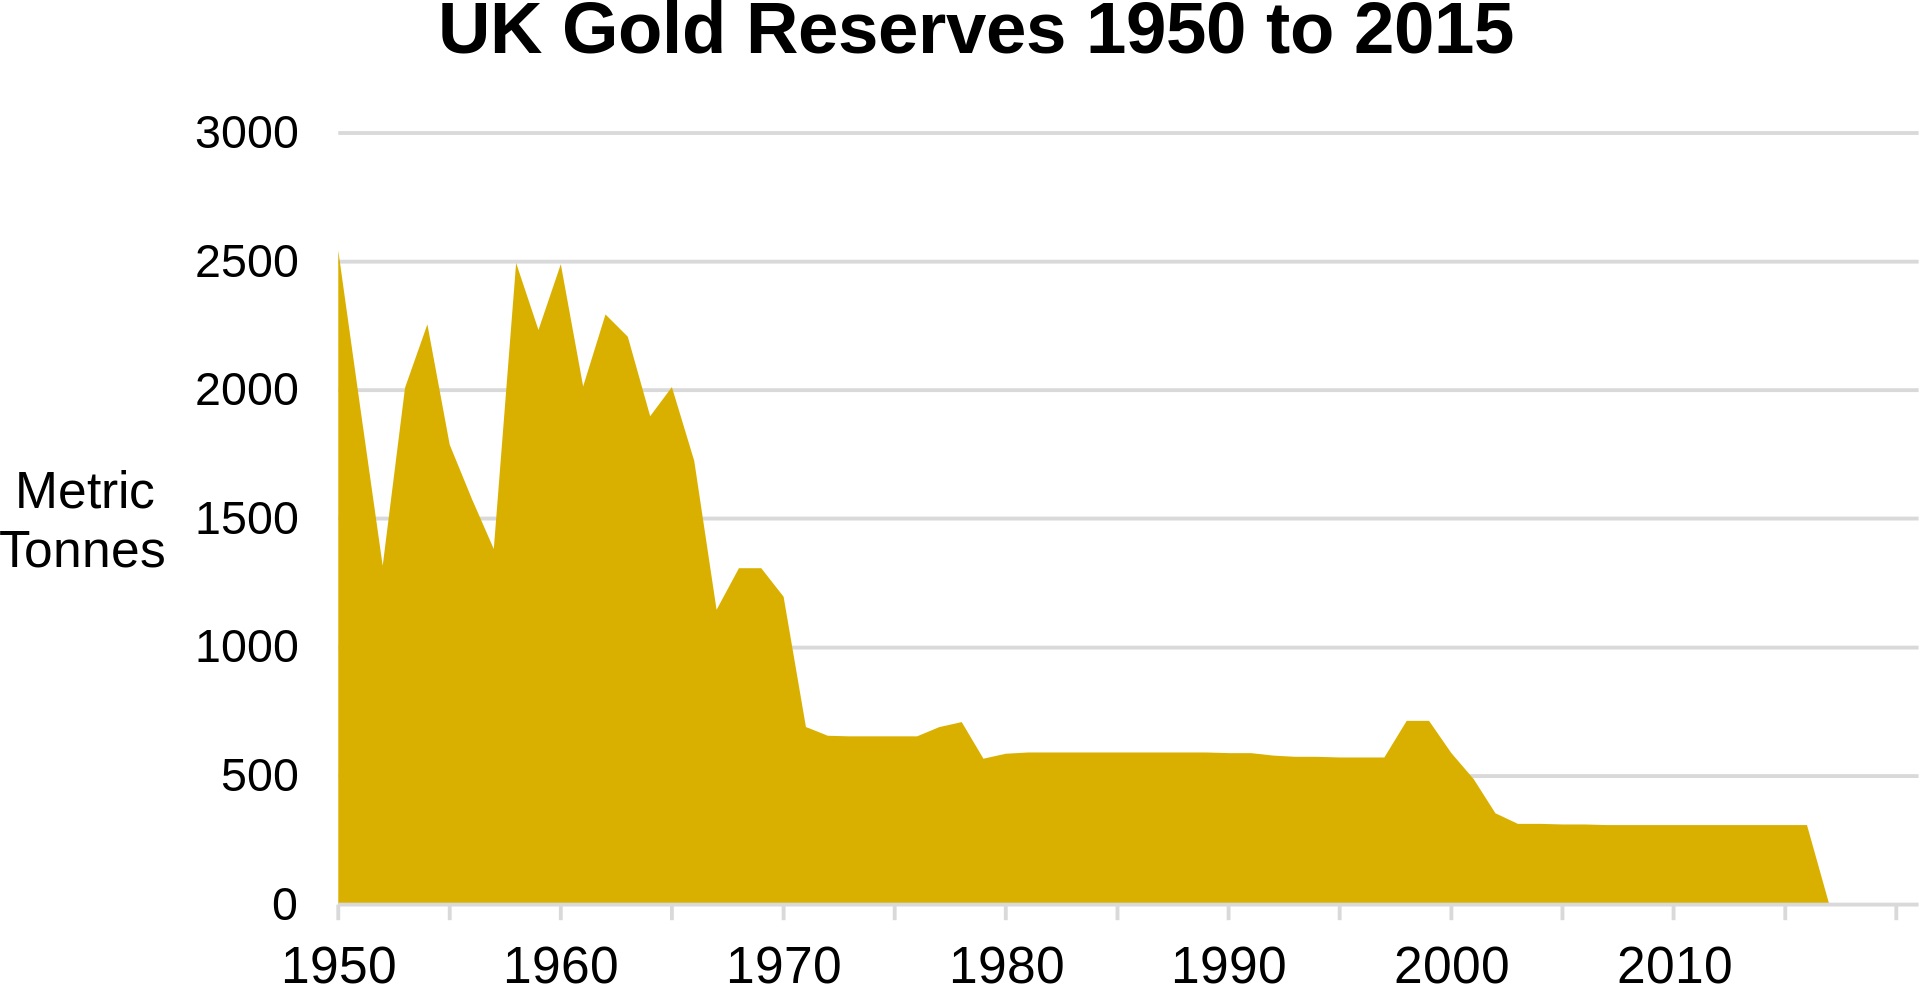 Historical UK Gold Reserves